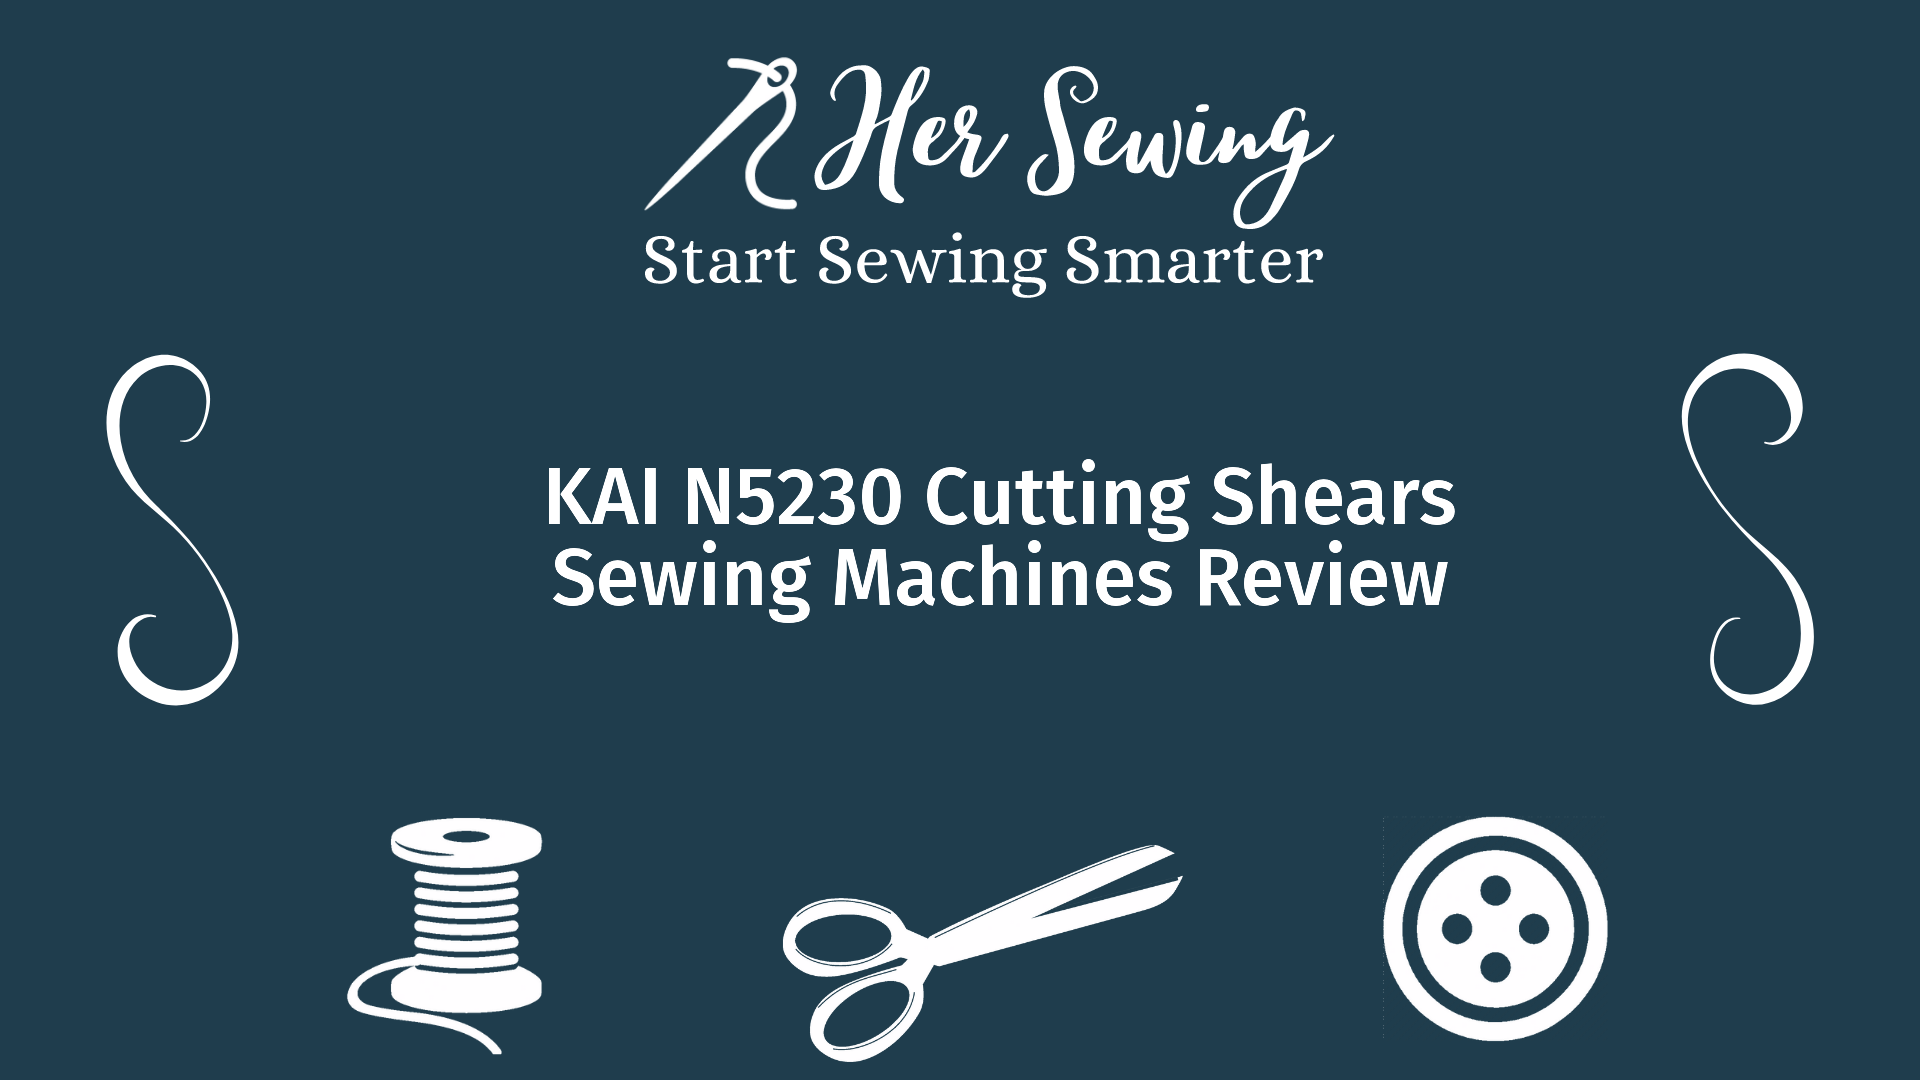 KAI N5230 Cutting Shears Sewing Machines Review